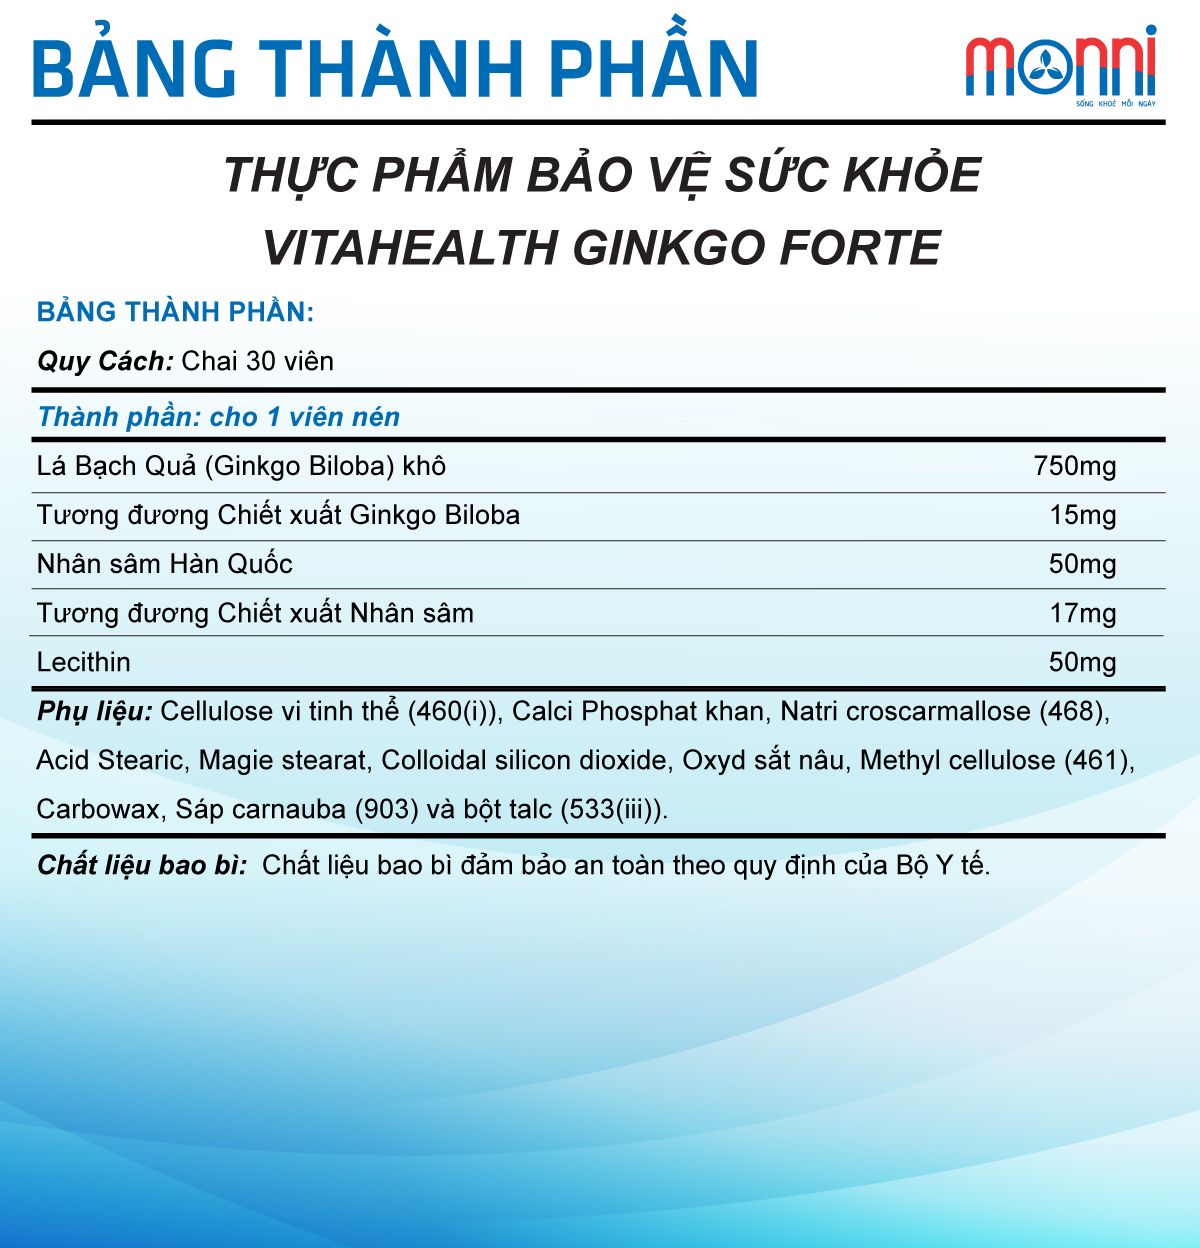 Vh Ginkgo Forte Bang Thanh Phan